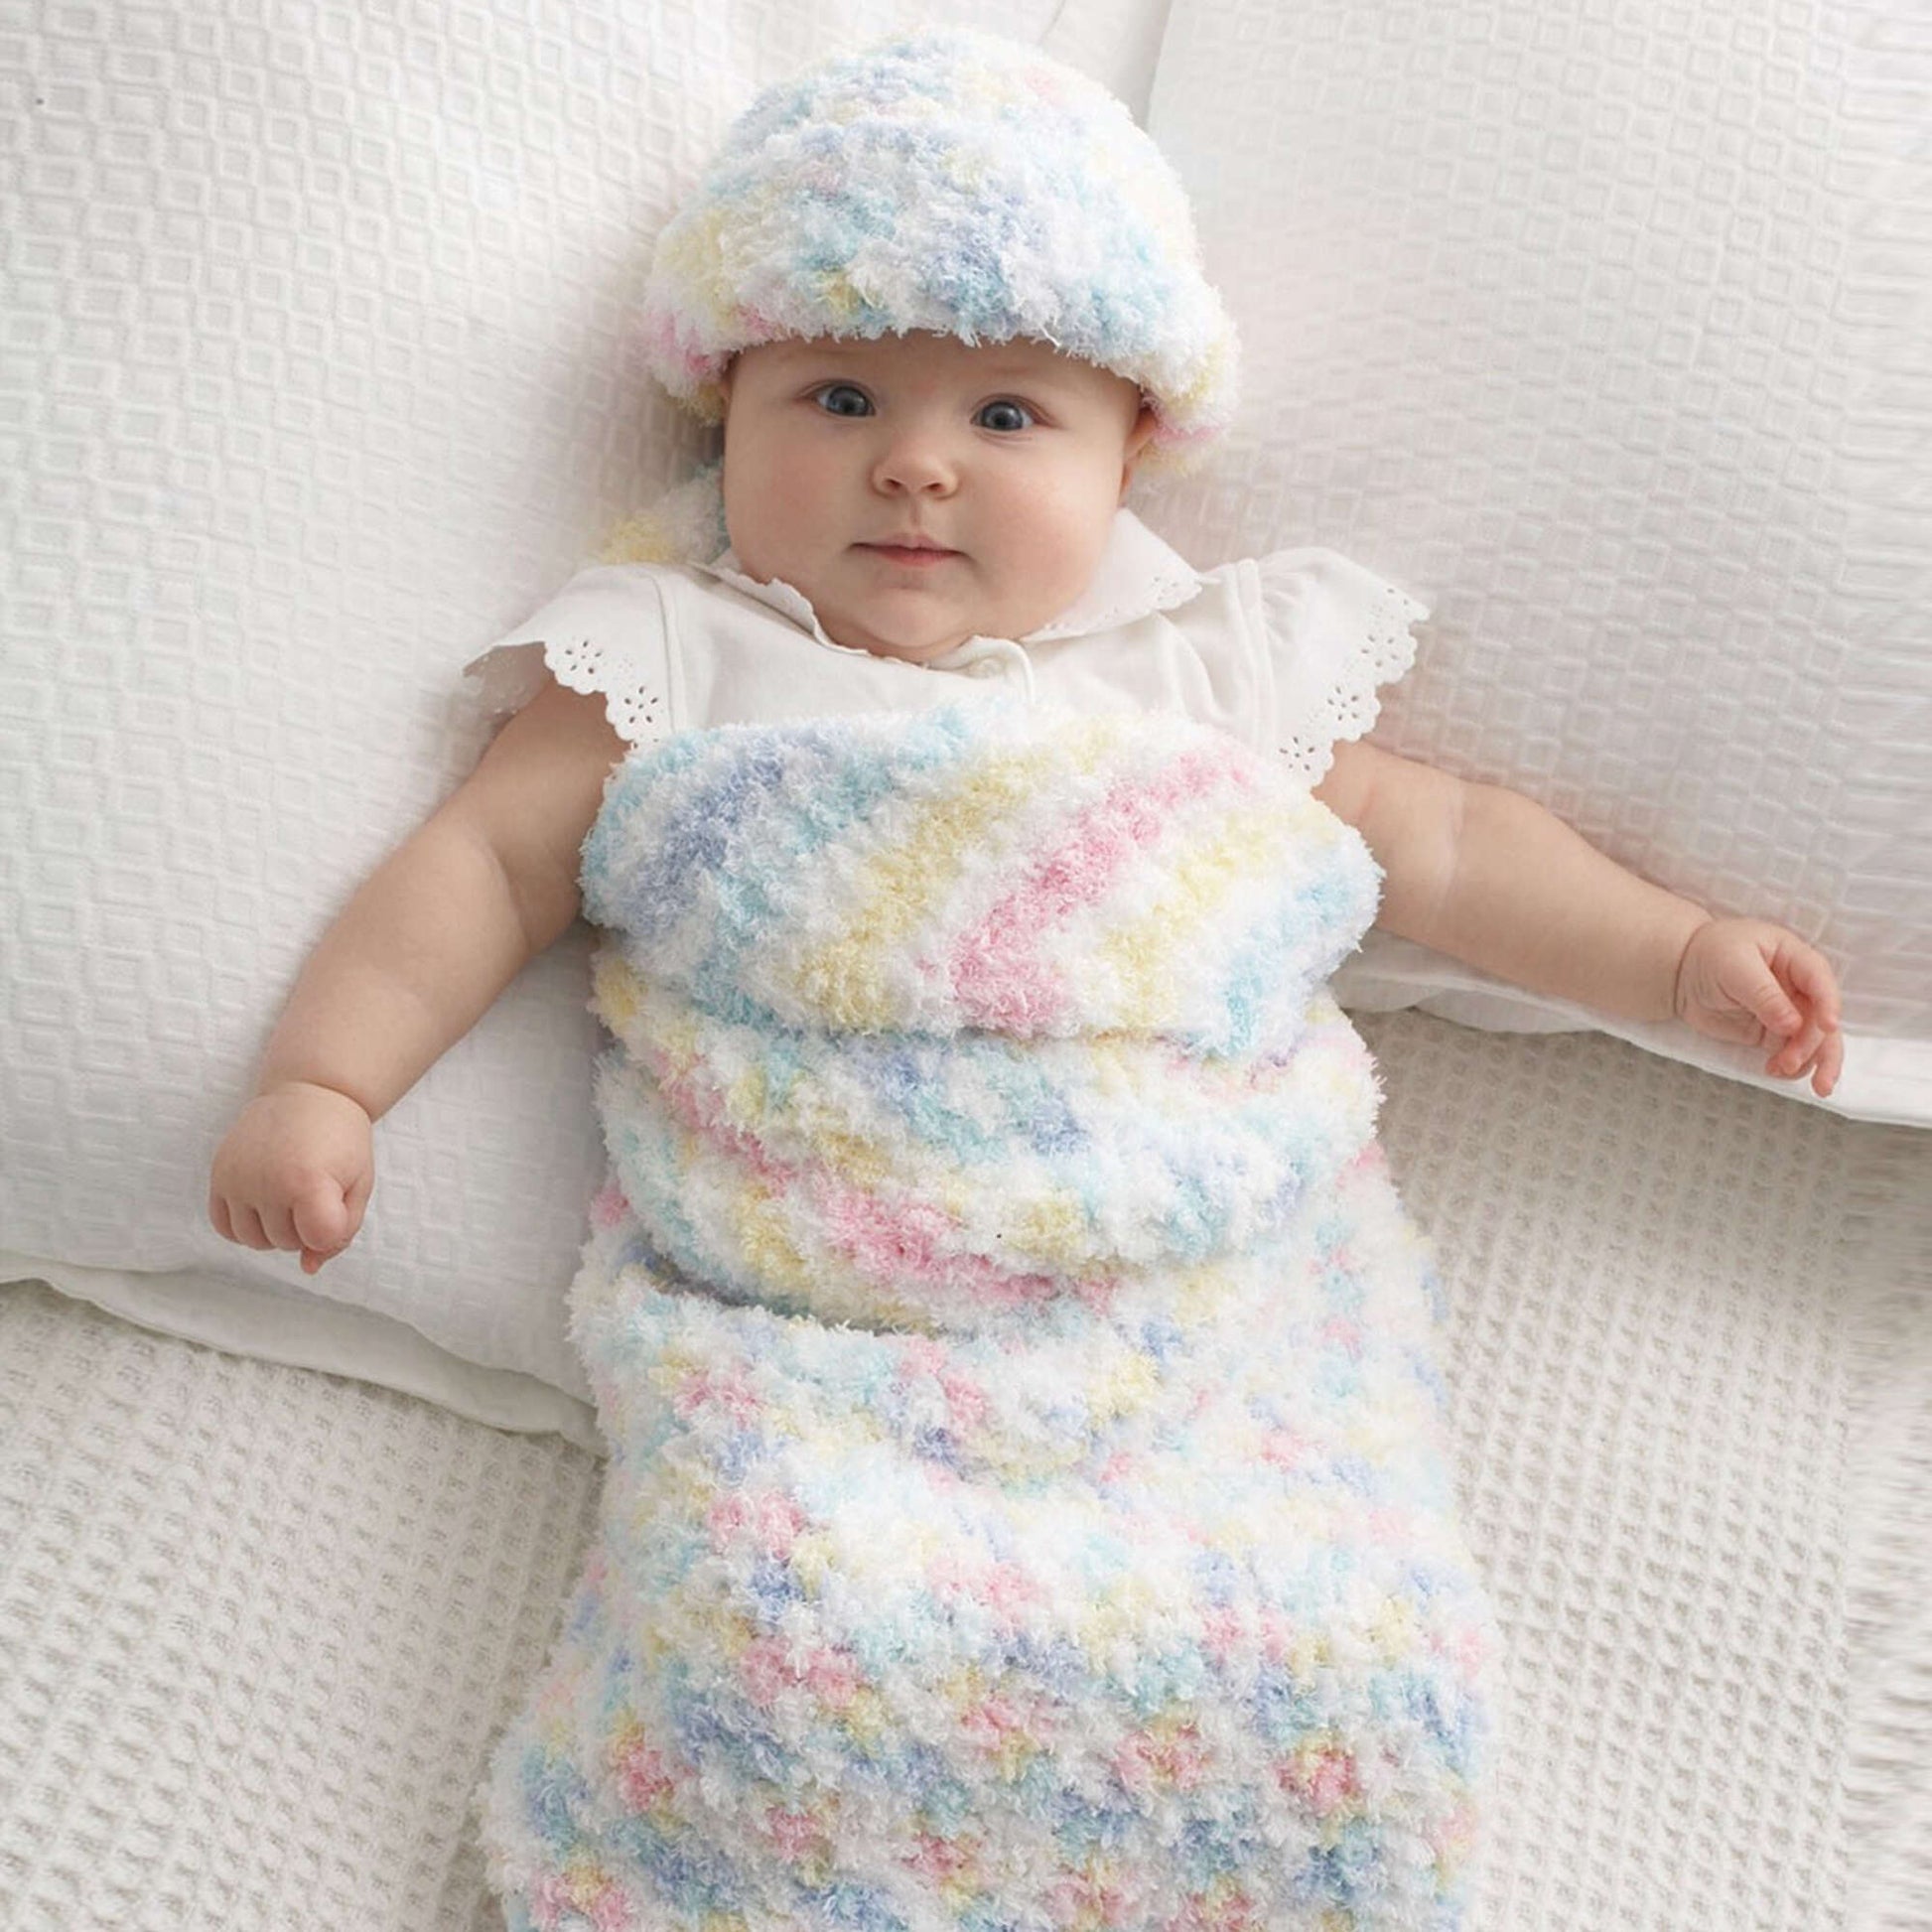 Bernat Baby Cocoon And Hat Crochet Bunting Bag made in Bernat Pipsqueak yarn